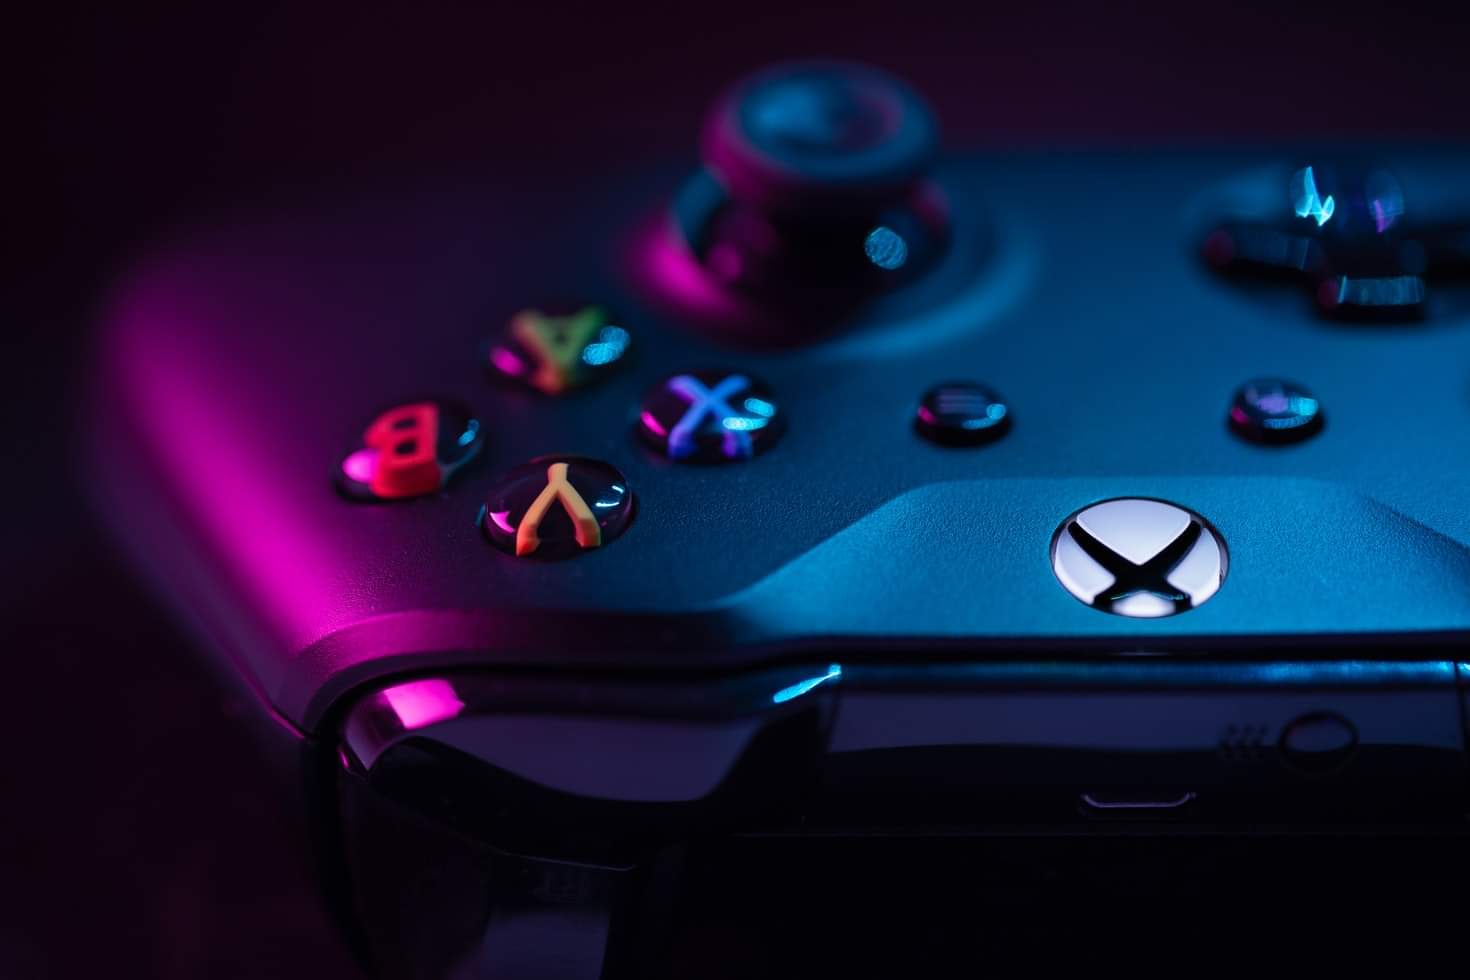 Trade-in Xbox: Essential tips to prepare your console